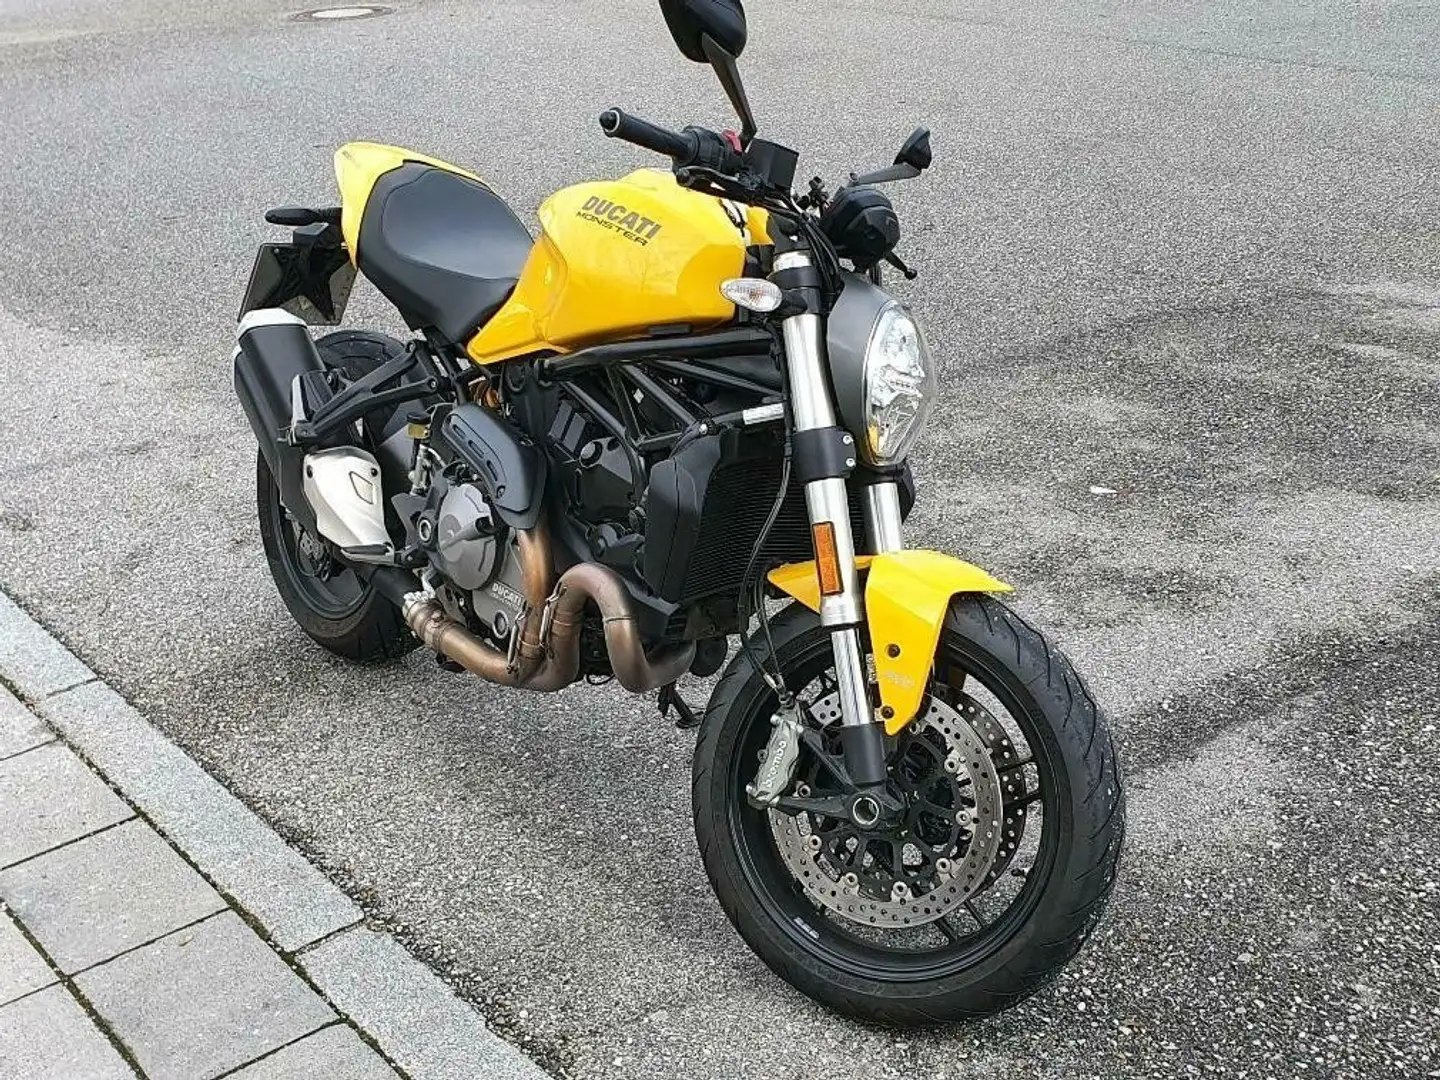 Ducati Monster 821 Yellow - 2